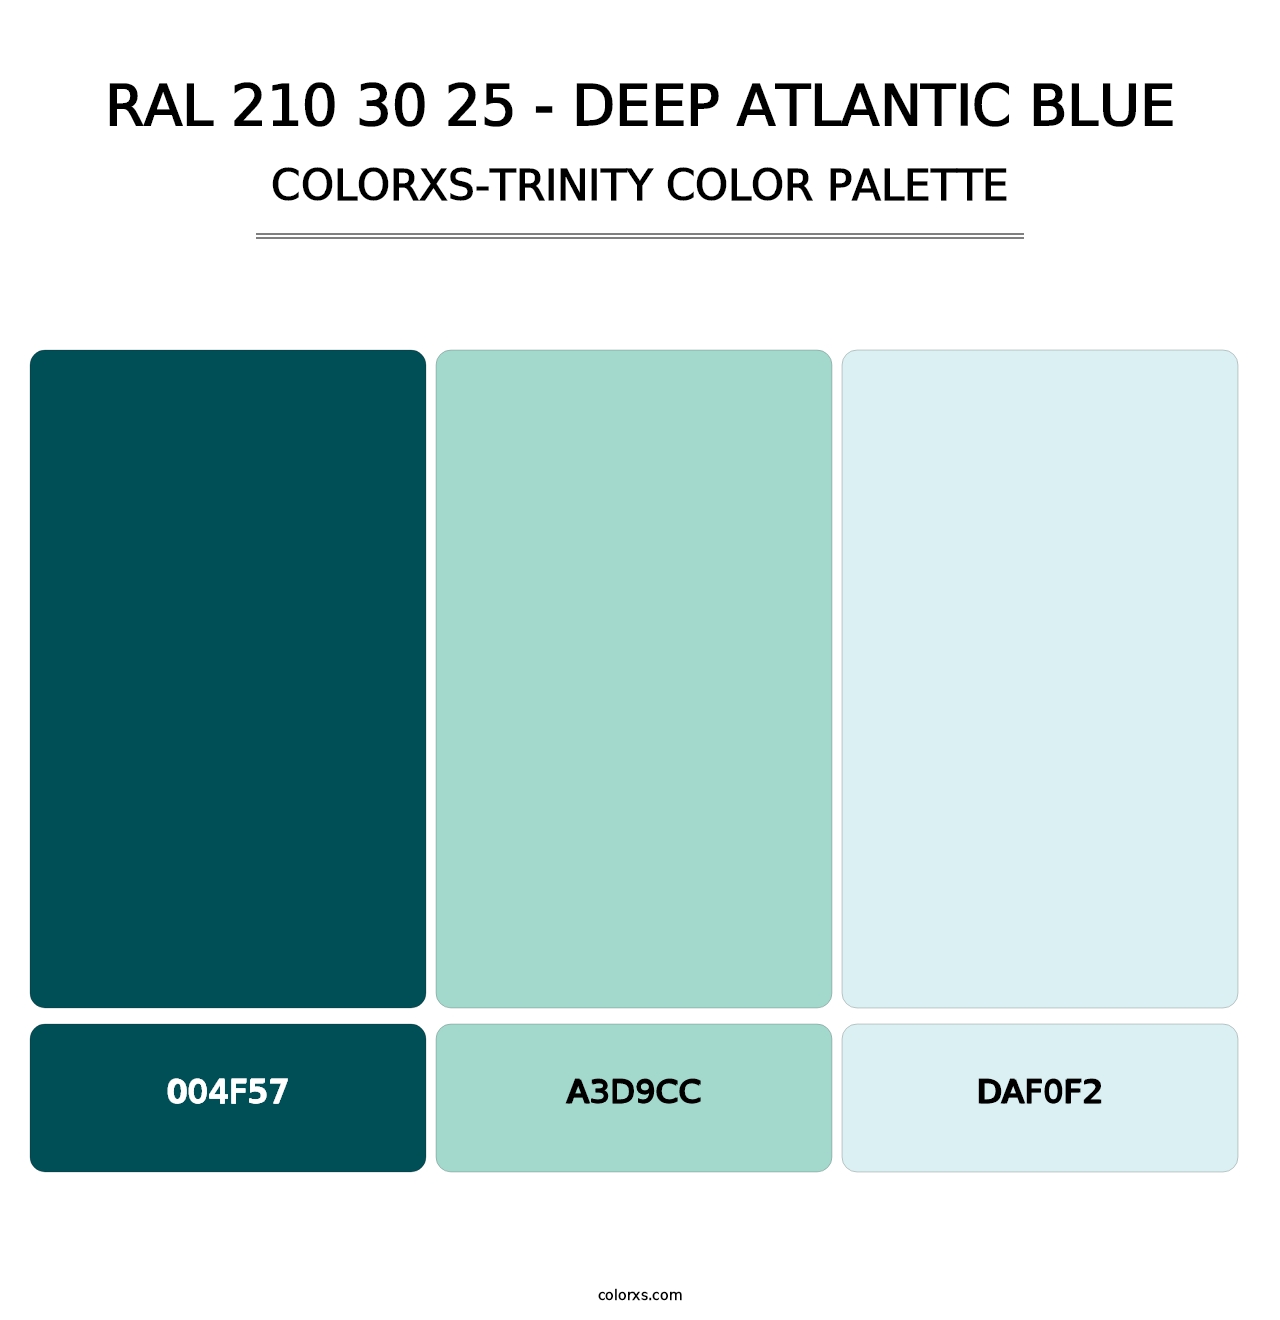 RAL 210 30 25 - Deep Atlantic Blue - Colorxs Trinity Palette